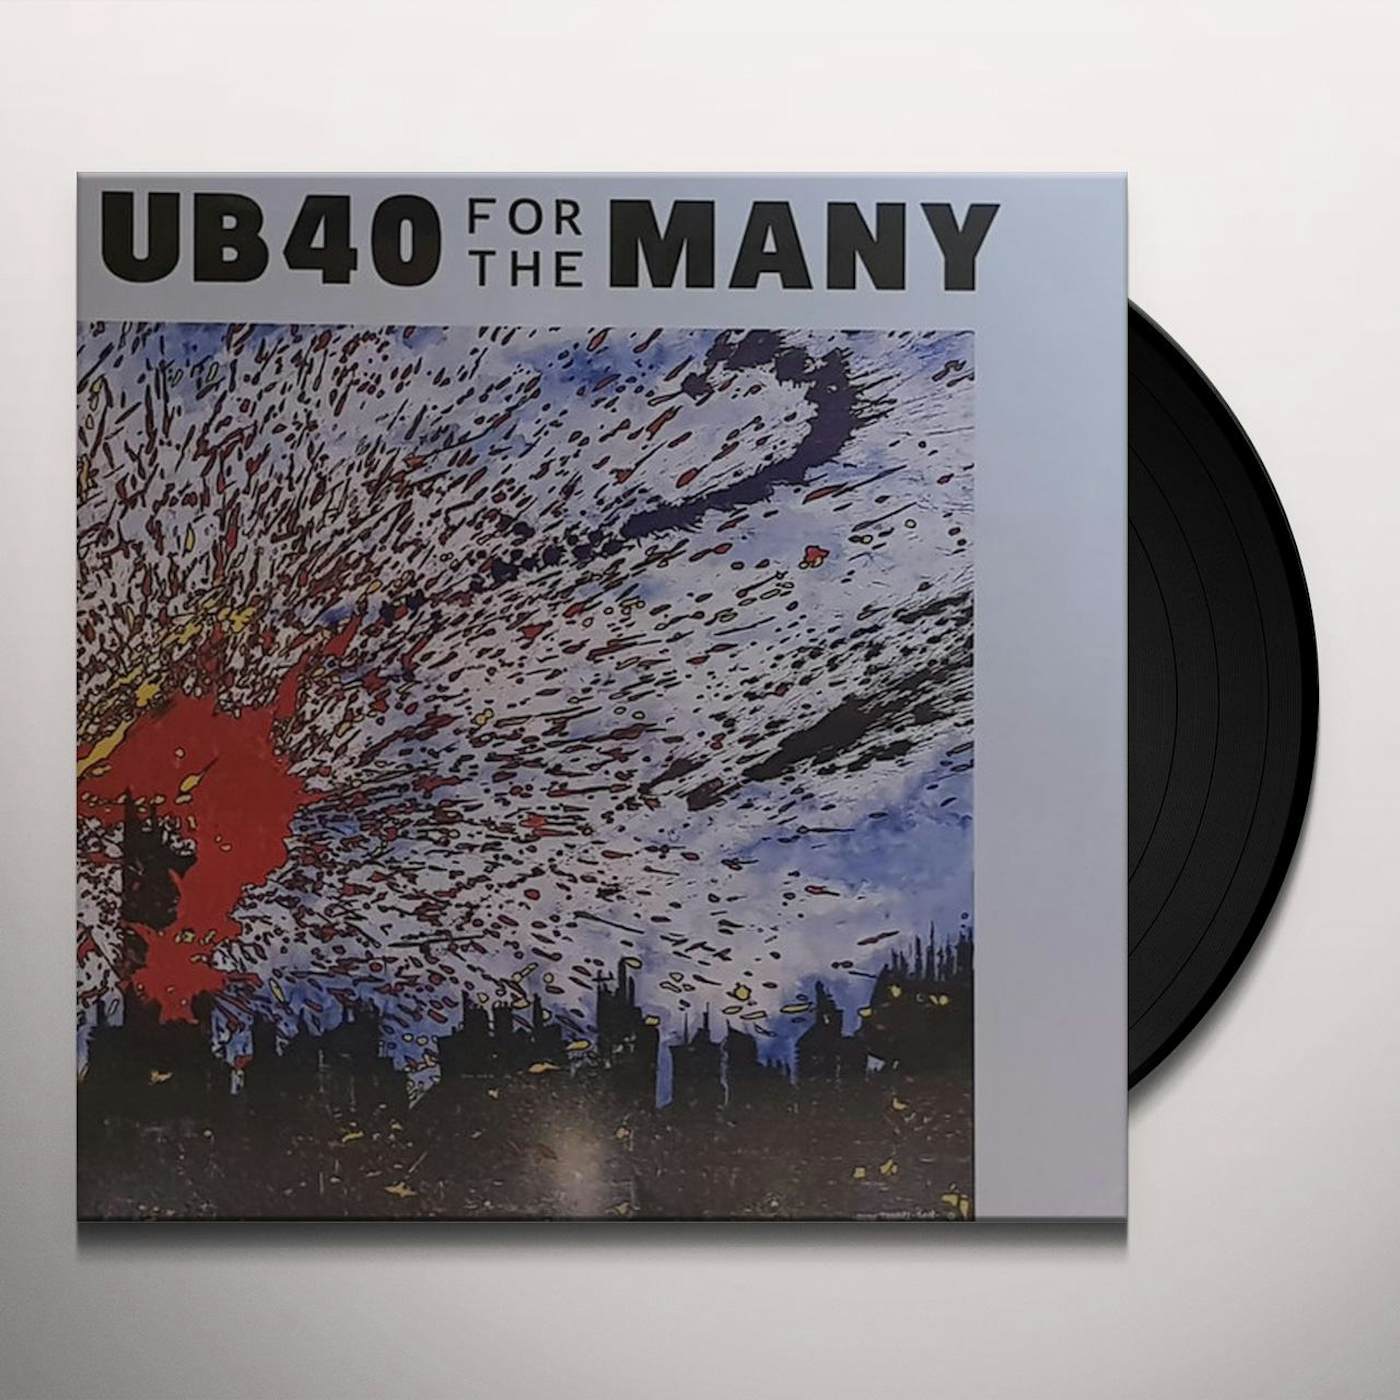 UB40 FOR THE MANY Vinyl Record